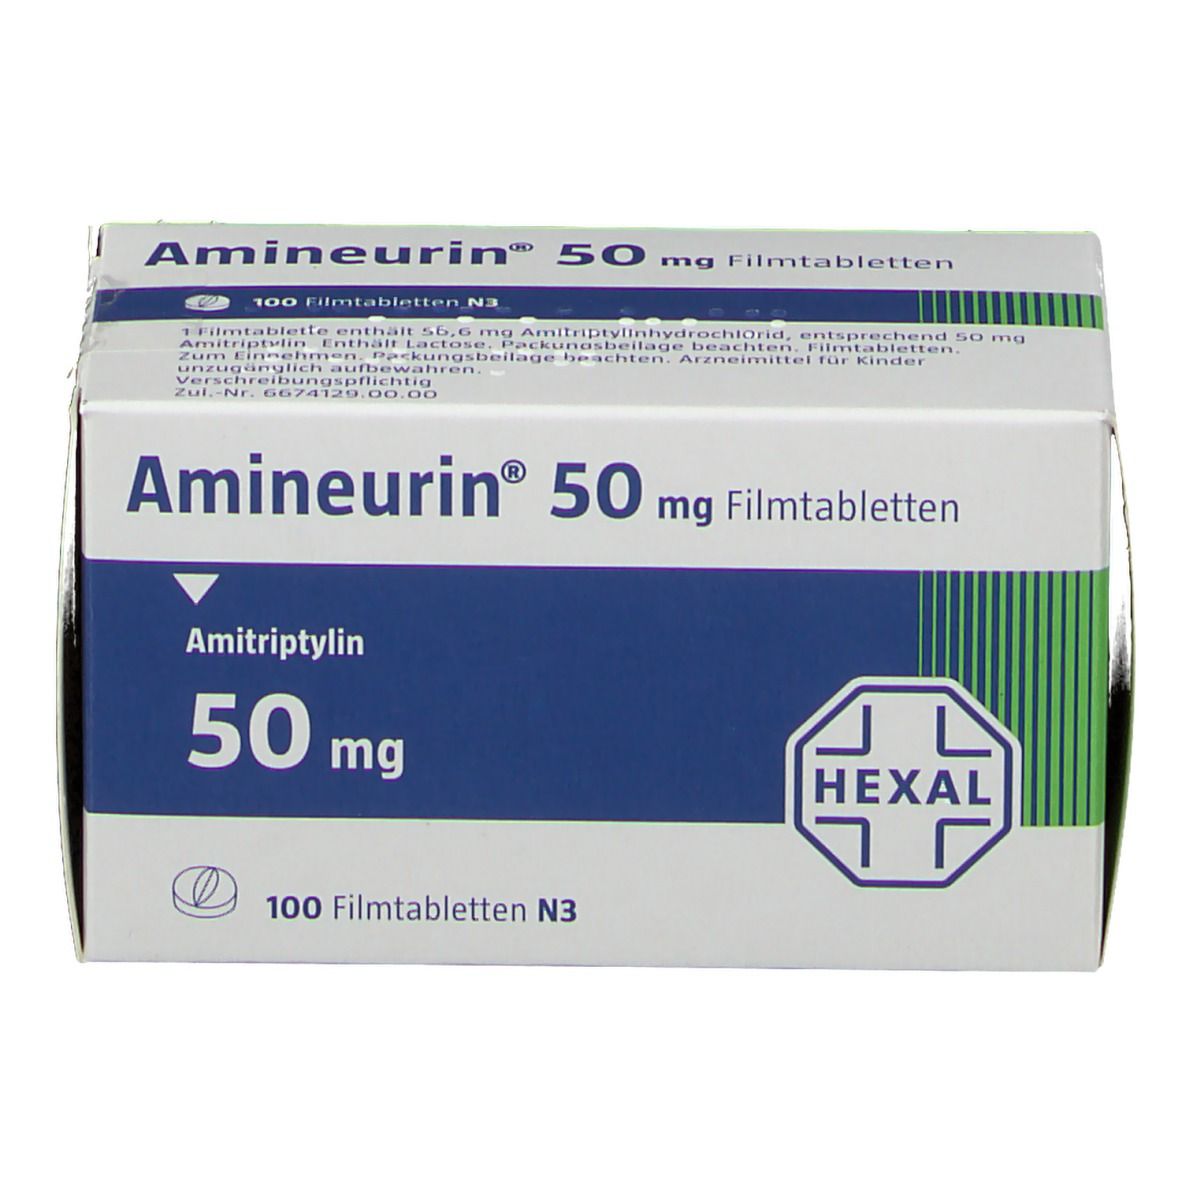 Amineurin® 50 mg